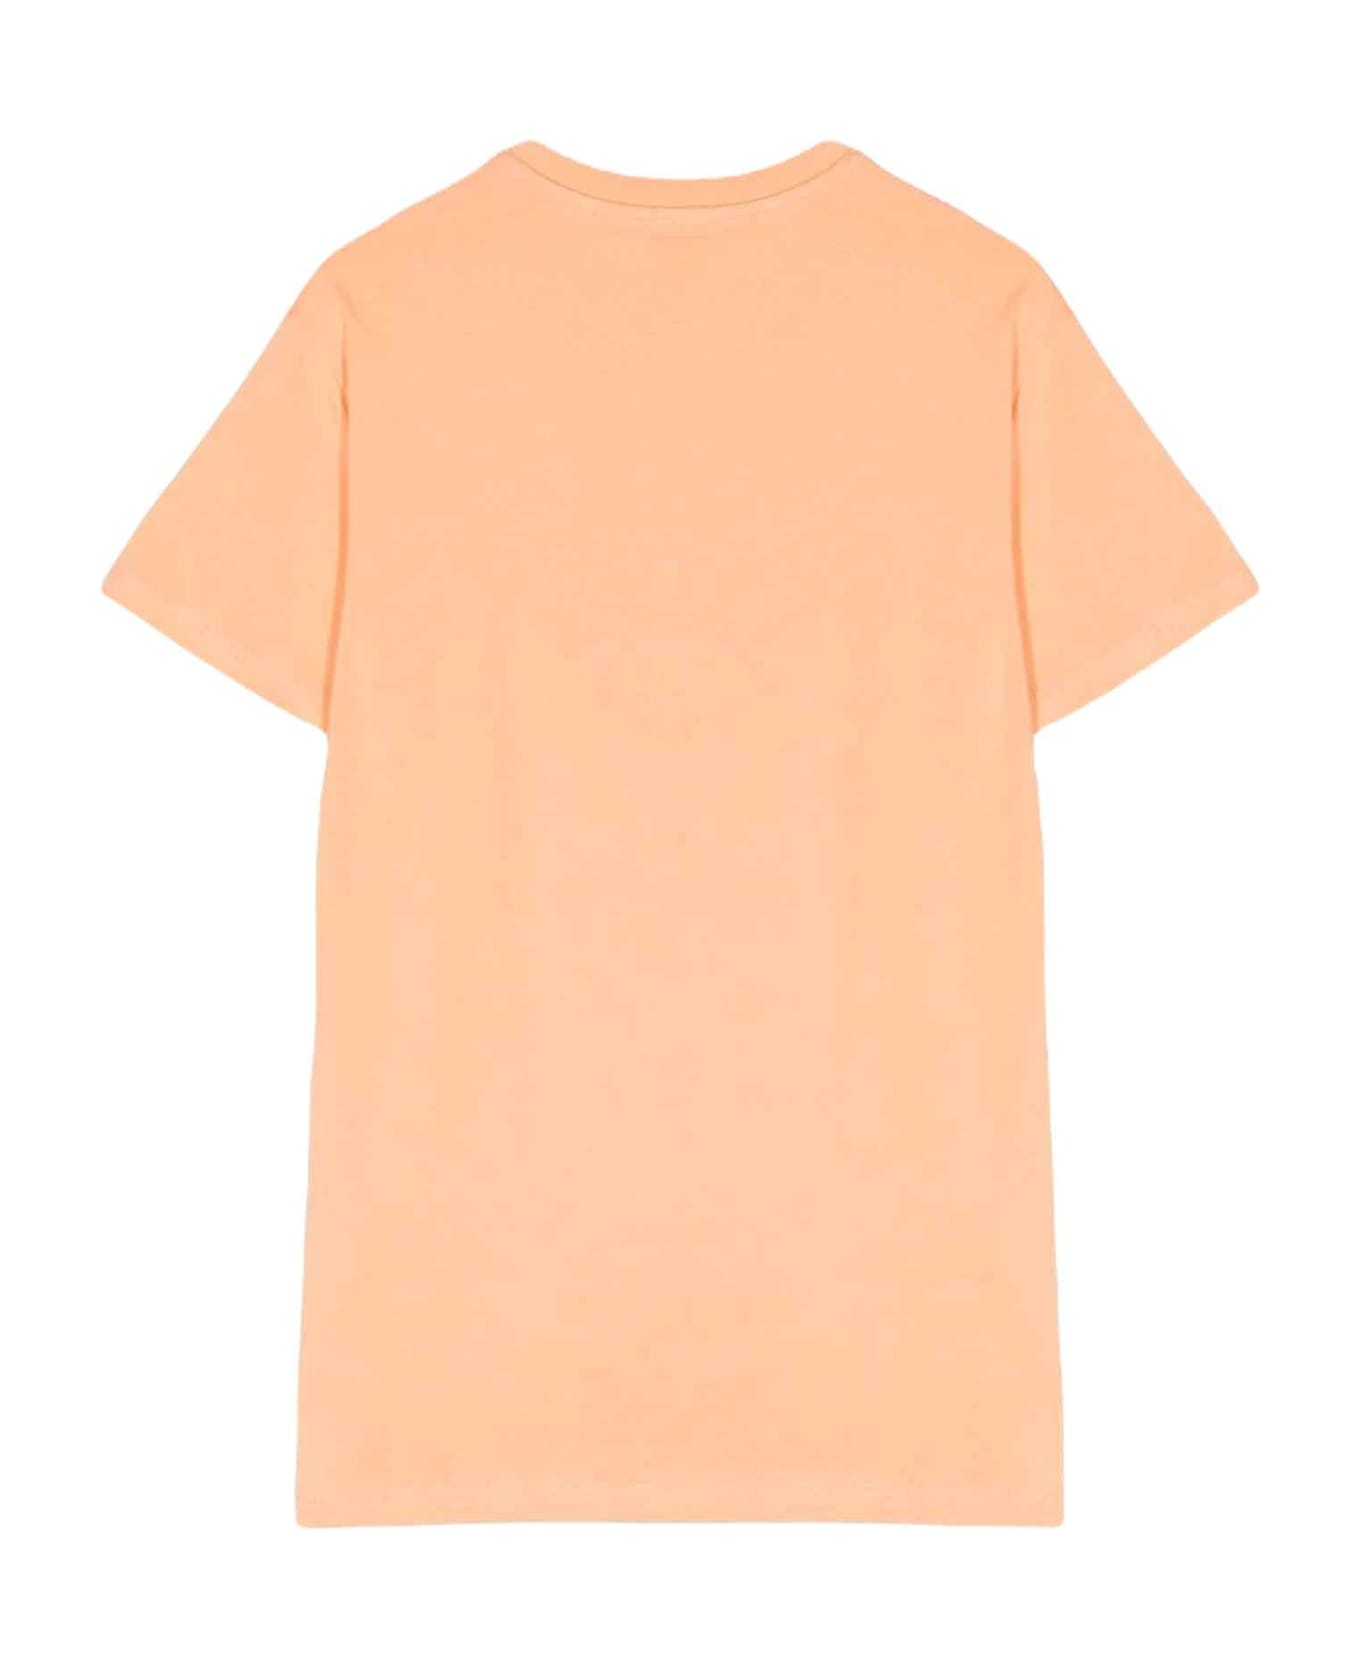 Kenzo Kids Orange Dress Girl - Giallo